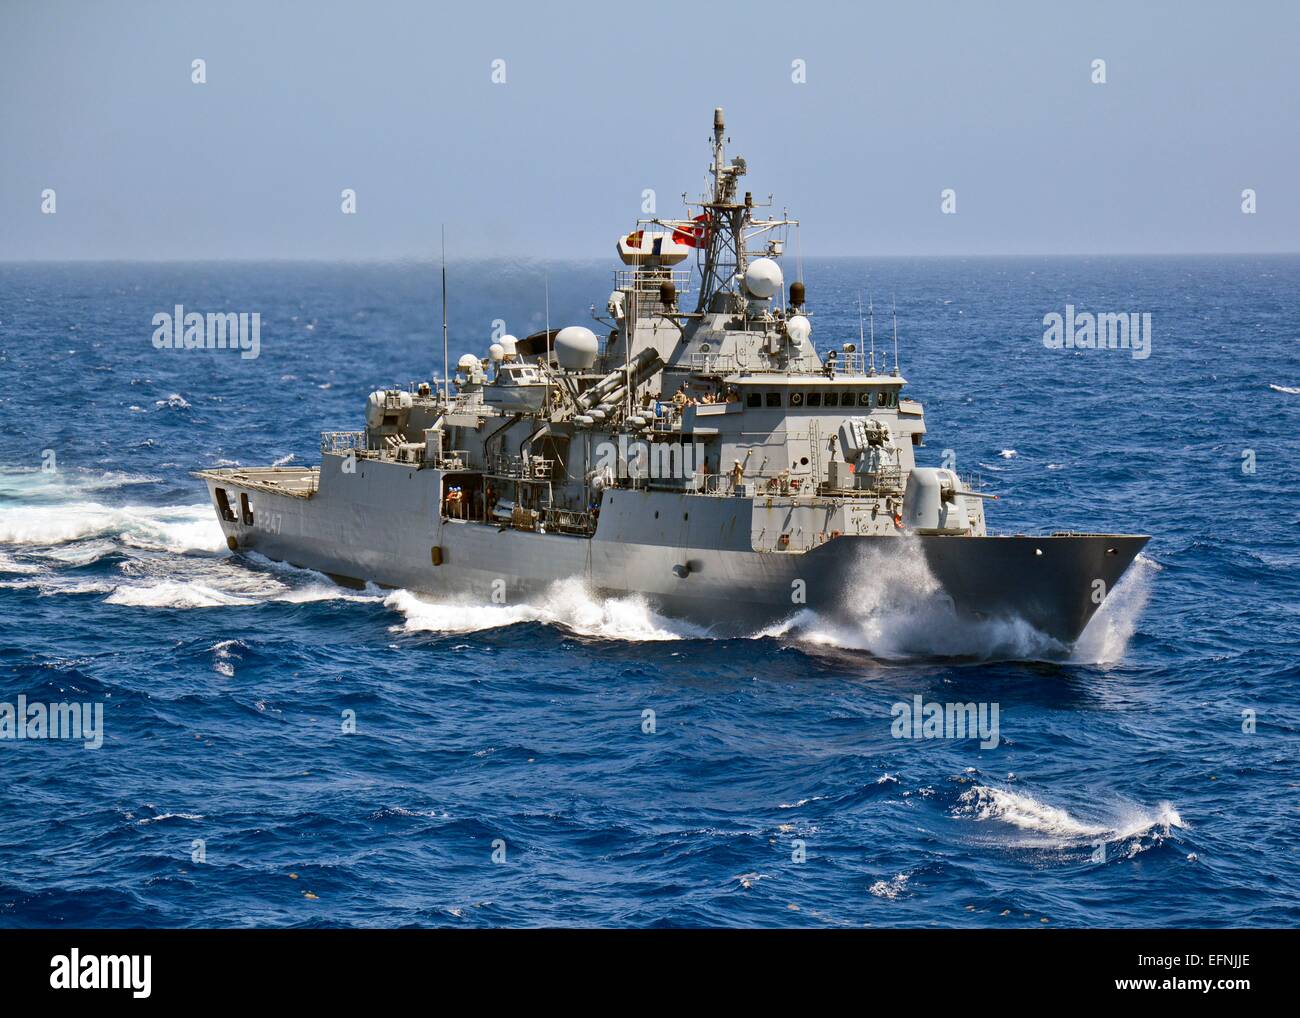 La Marina turca Salih Reis fregata classe TCG Kemalreis manovre durante la NATO operazioni marittime Luglio 28, 2014 nell'Oceano Atlantico. Foto Stock